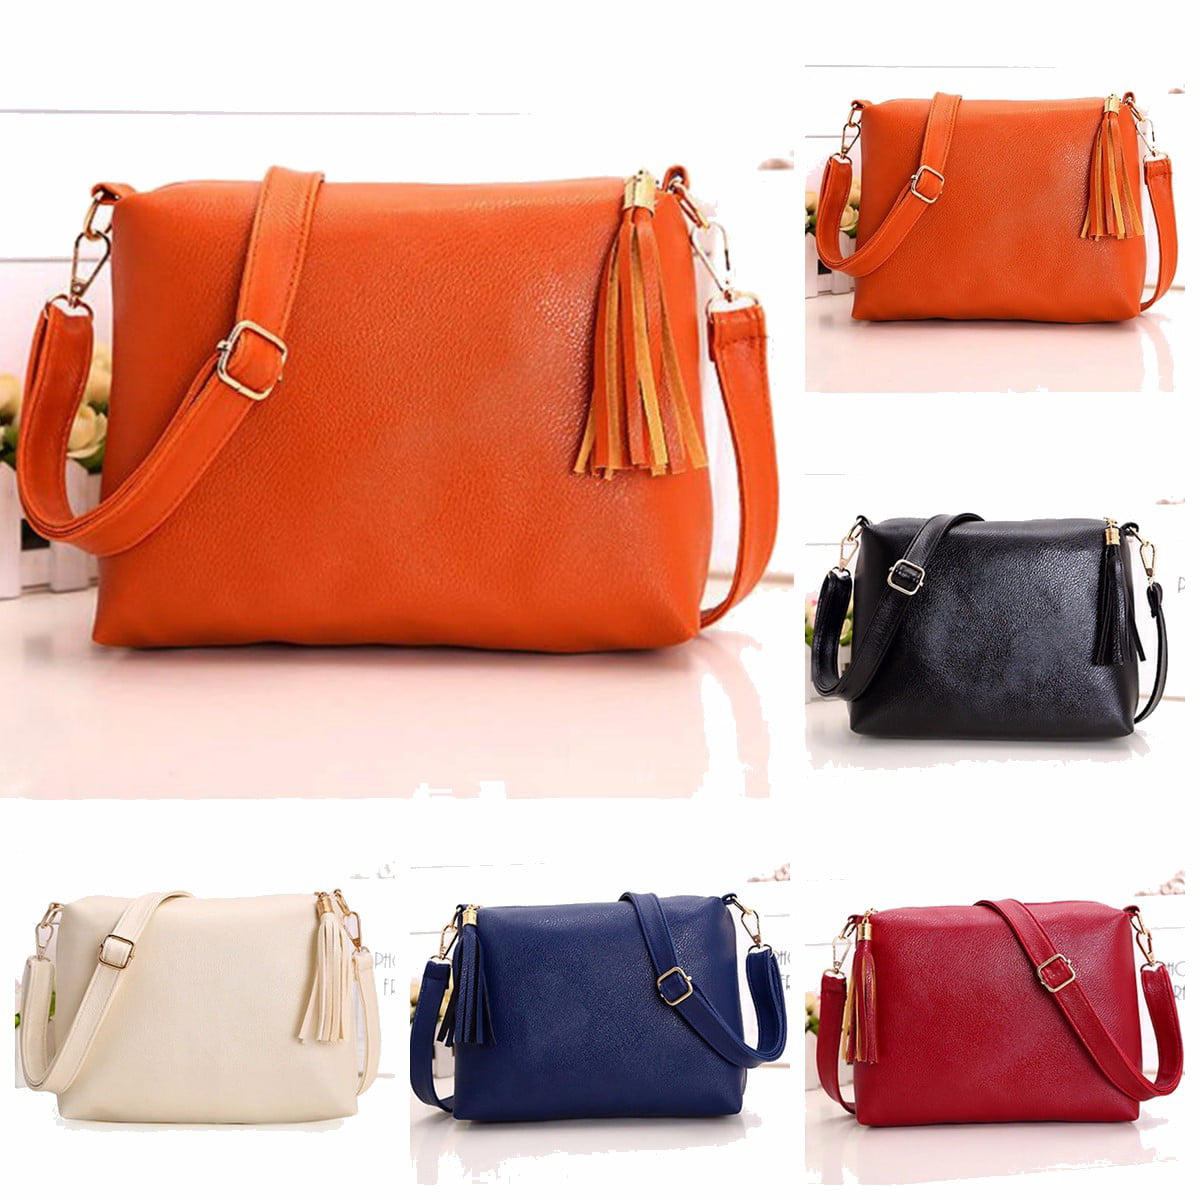 Meigar - Fashion Leather Hobo Handbags For Women Tote Purse Shoulder Bag - 0